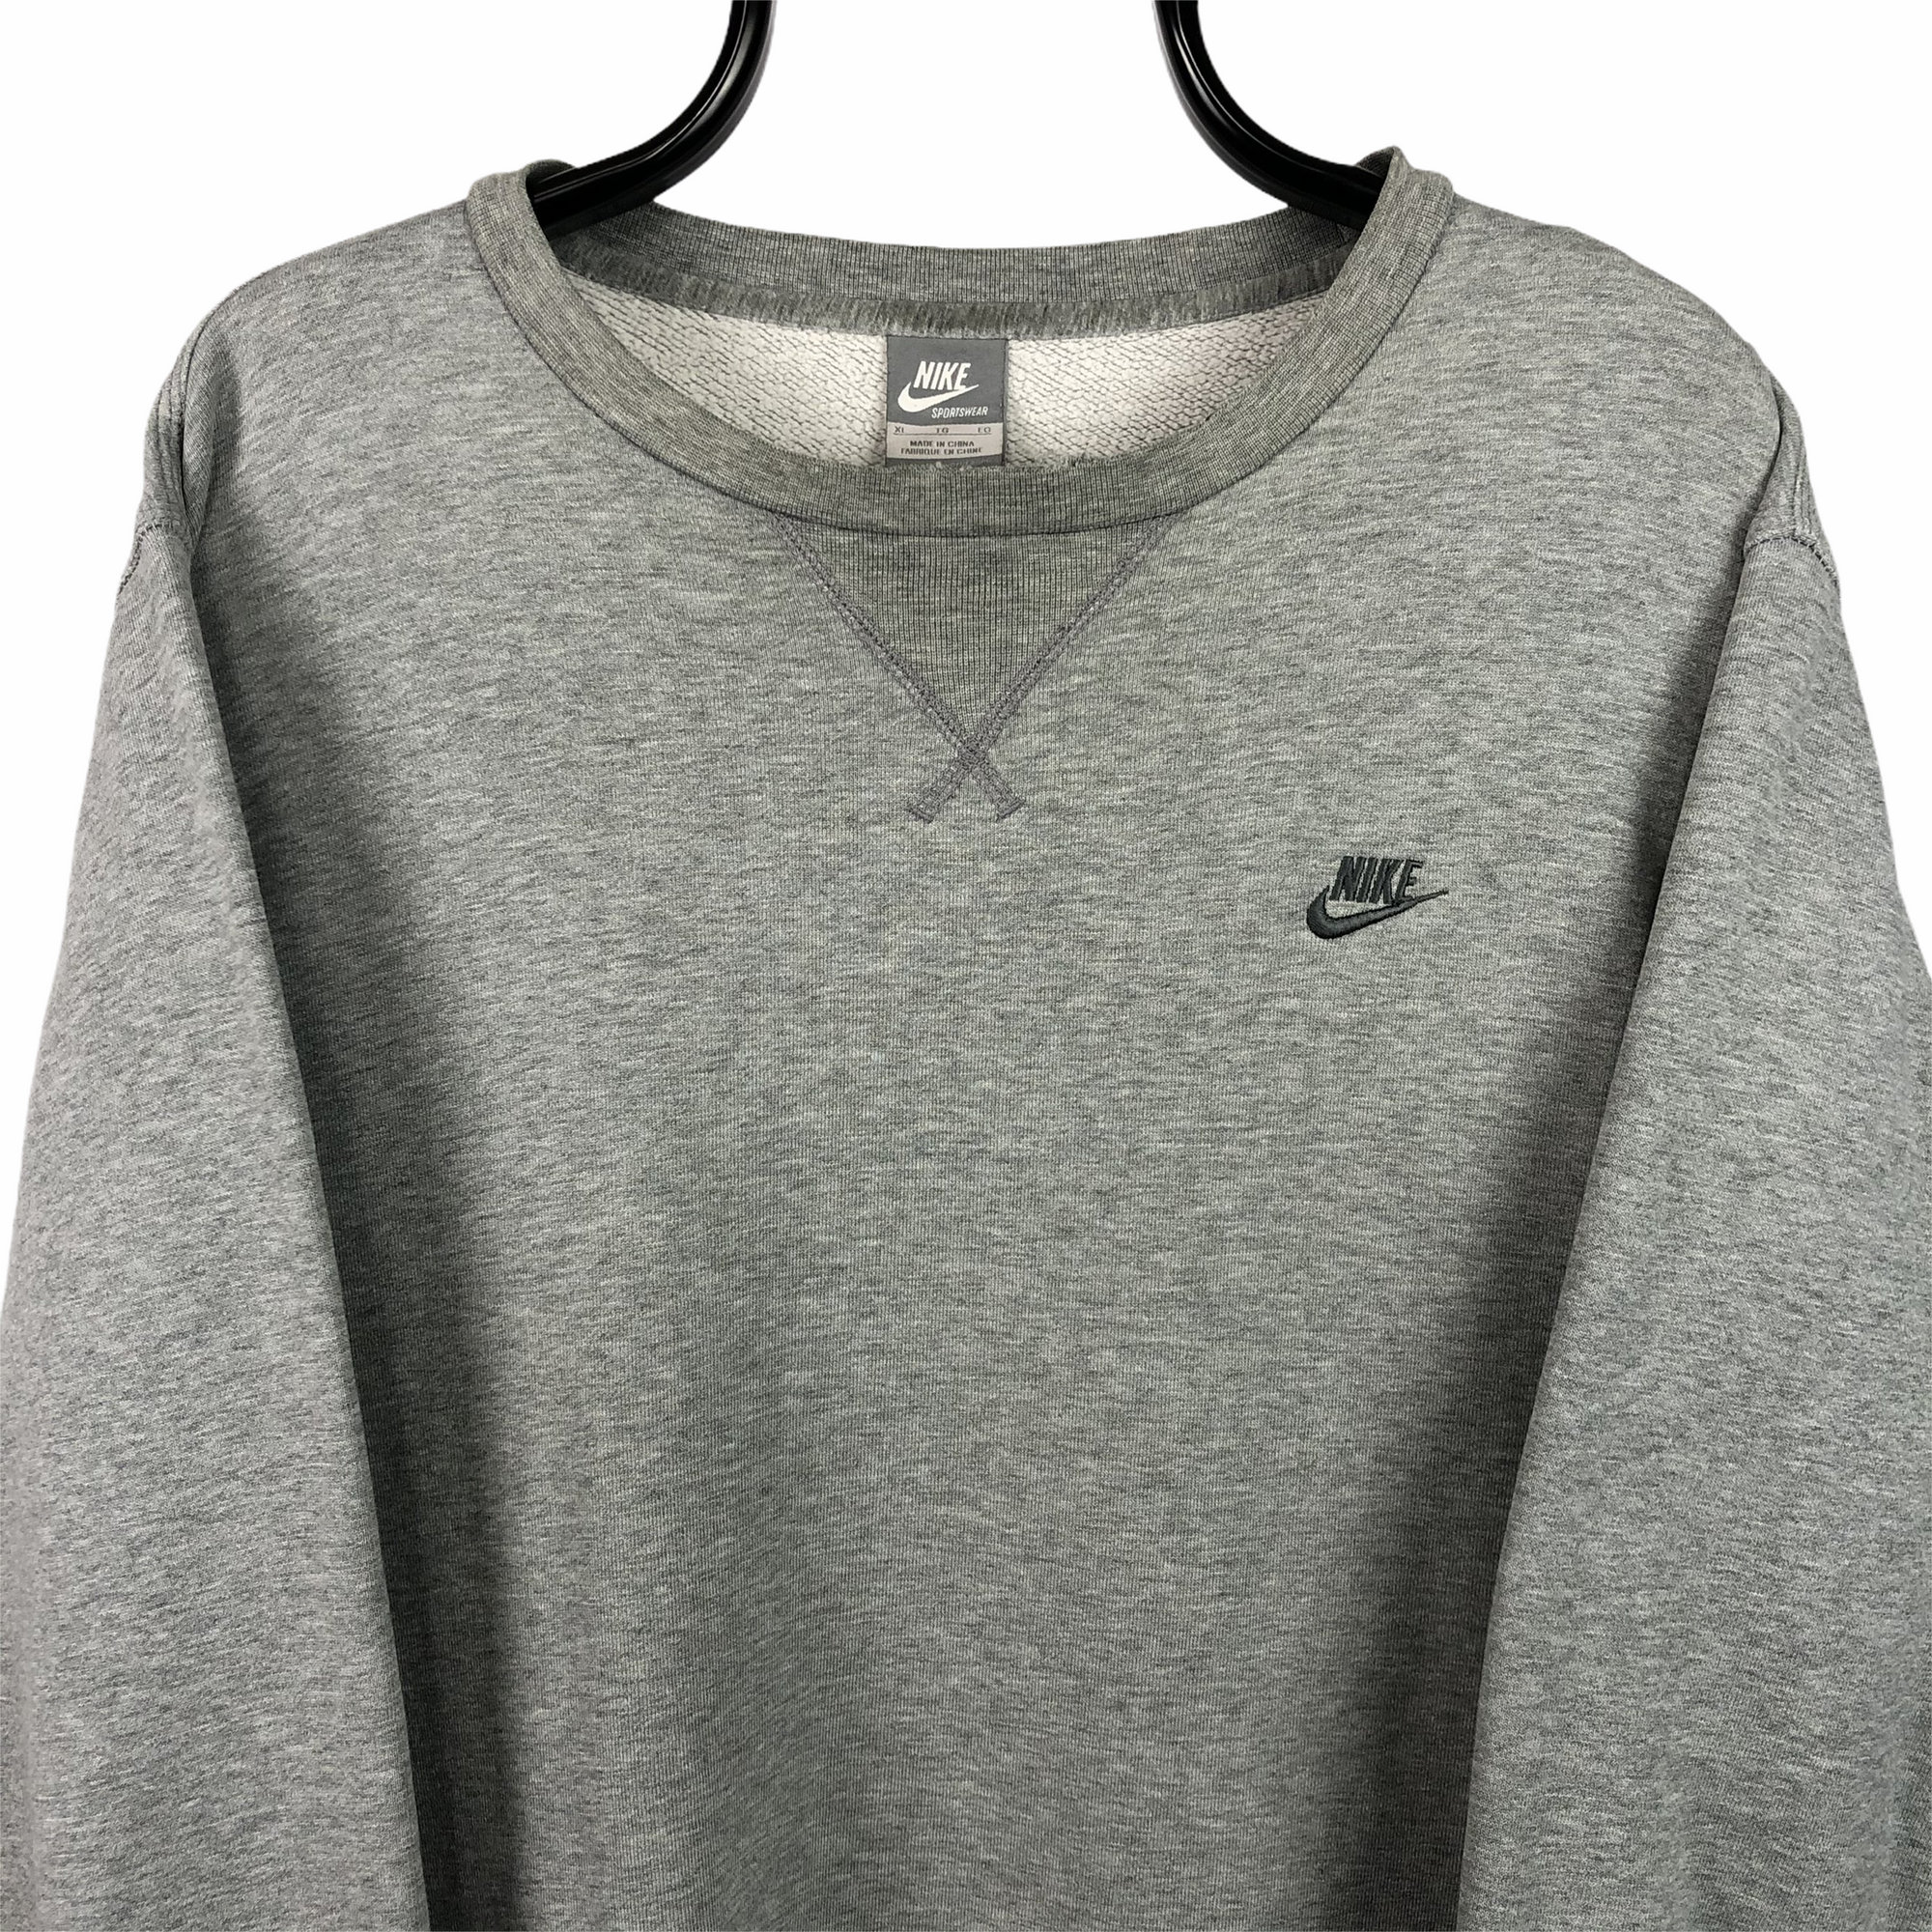 Vintage Nike Embroidered Small Logo Sweatshirt in Grey - Men's XL/Women's XXL